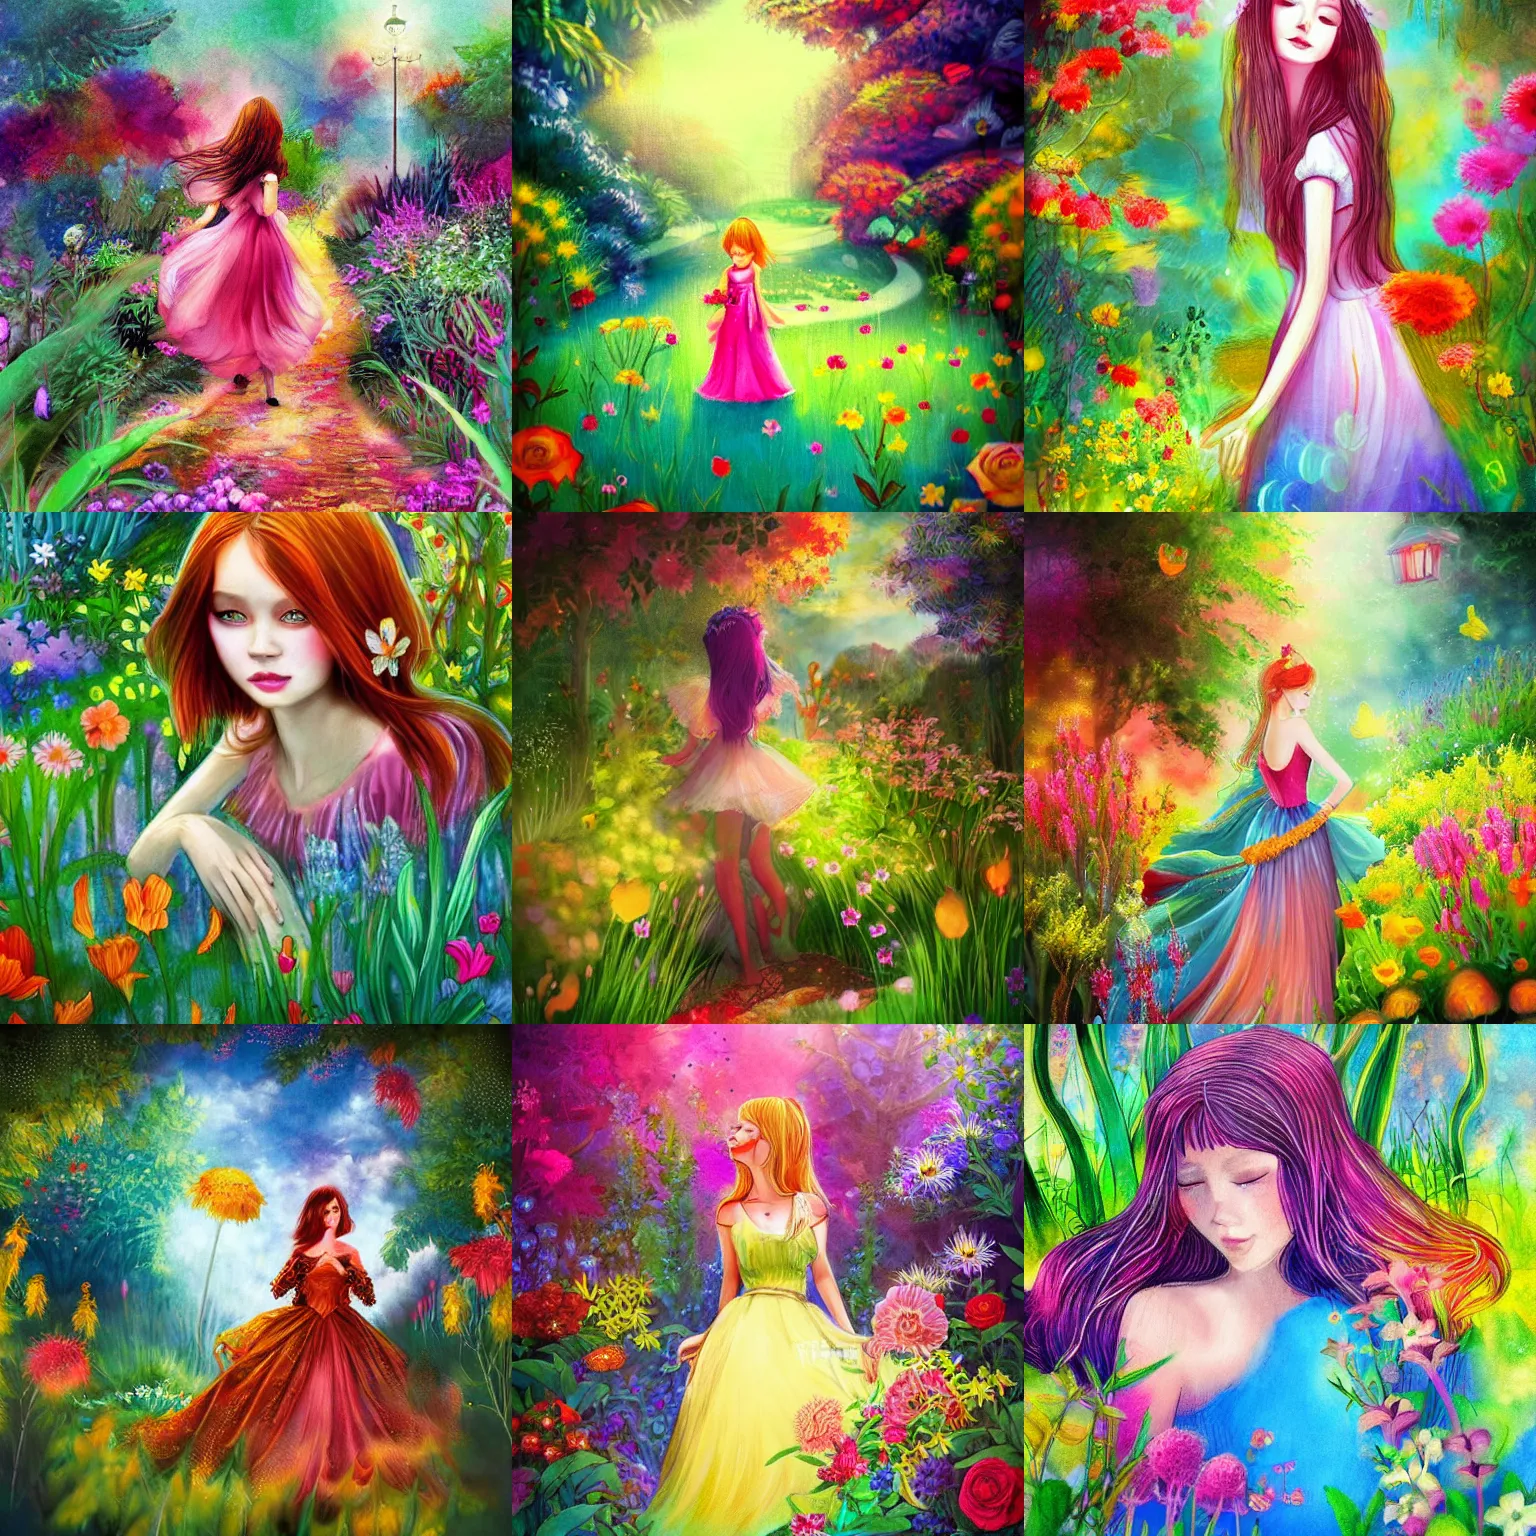 Prompt: kind princess, garden, atmosphere, vibrant, colorful, illustration, dreamy, art, realistic